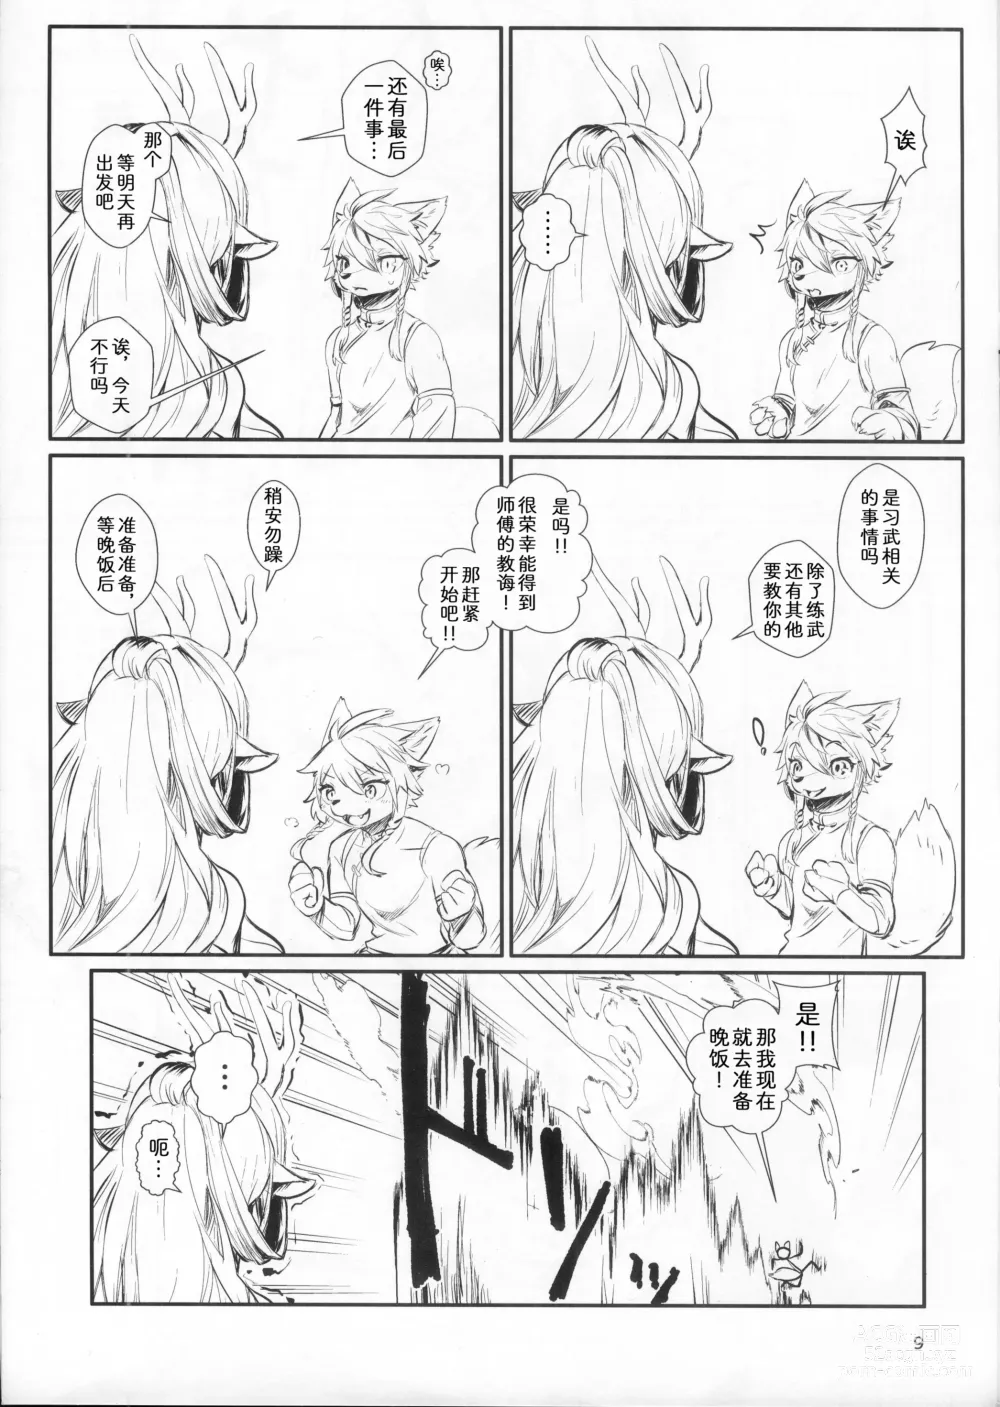 Page 8 of doujinshi 娇声，幽谷飘香